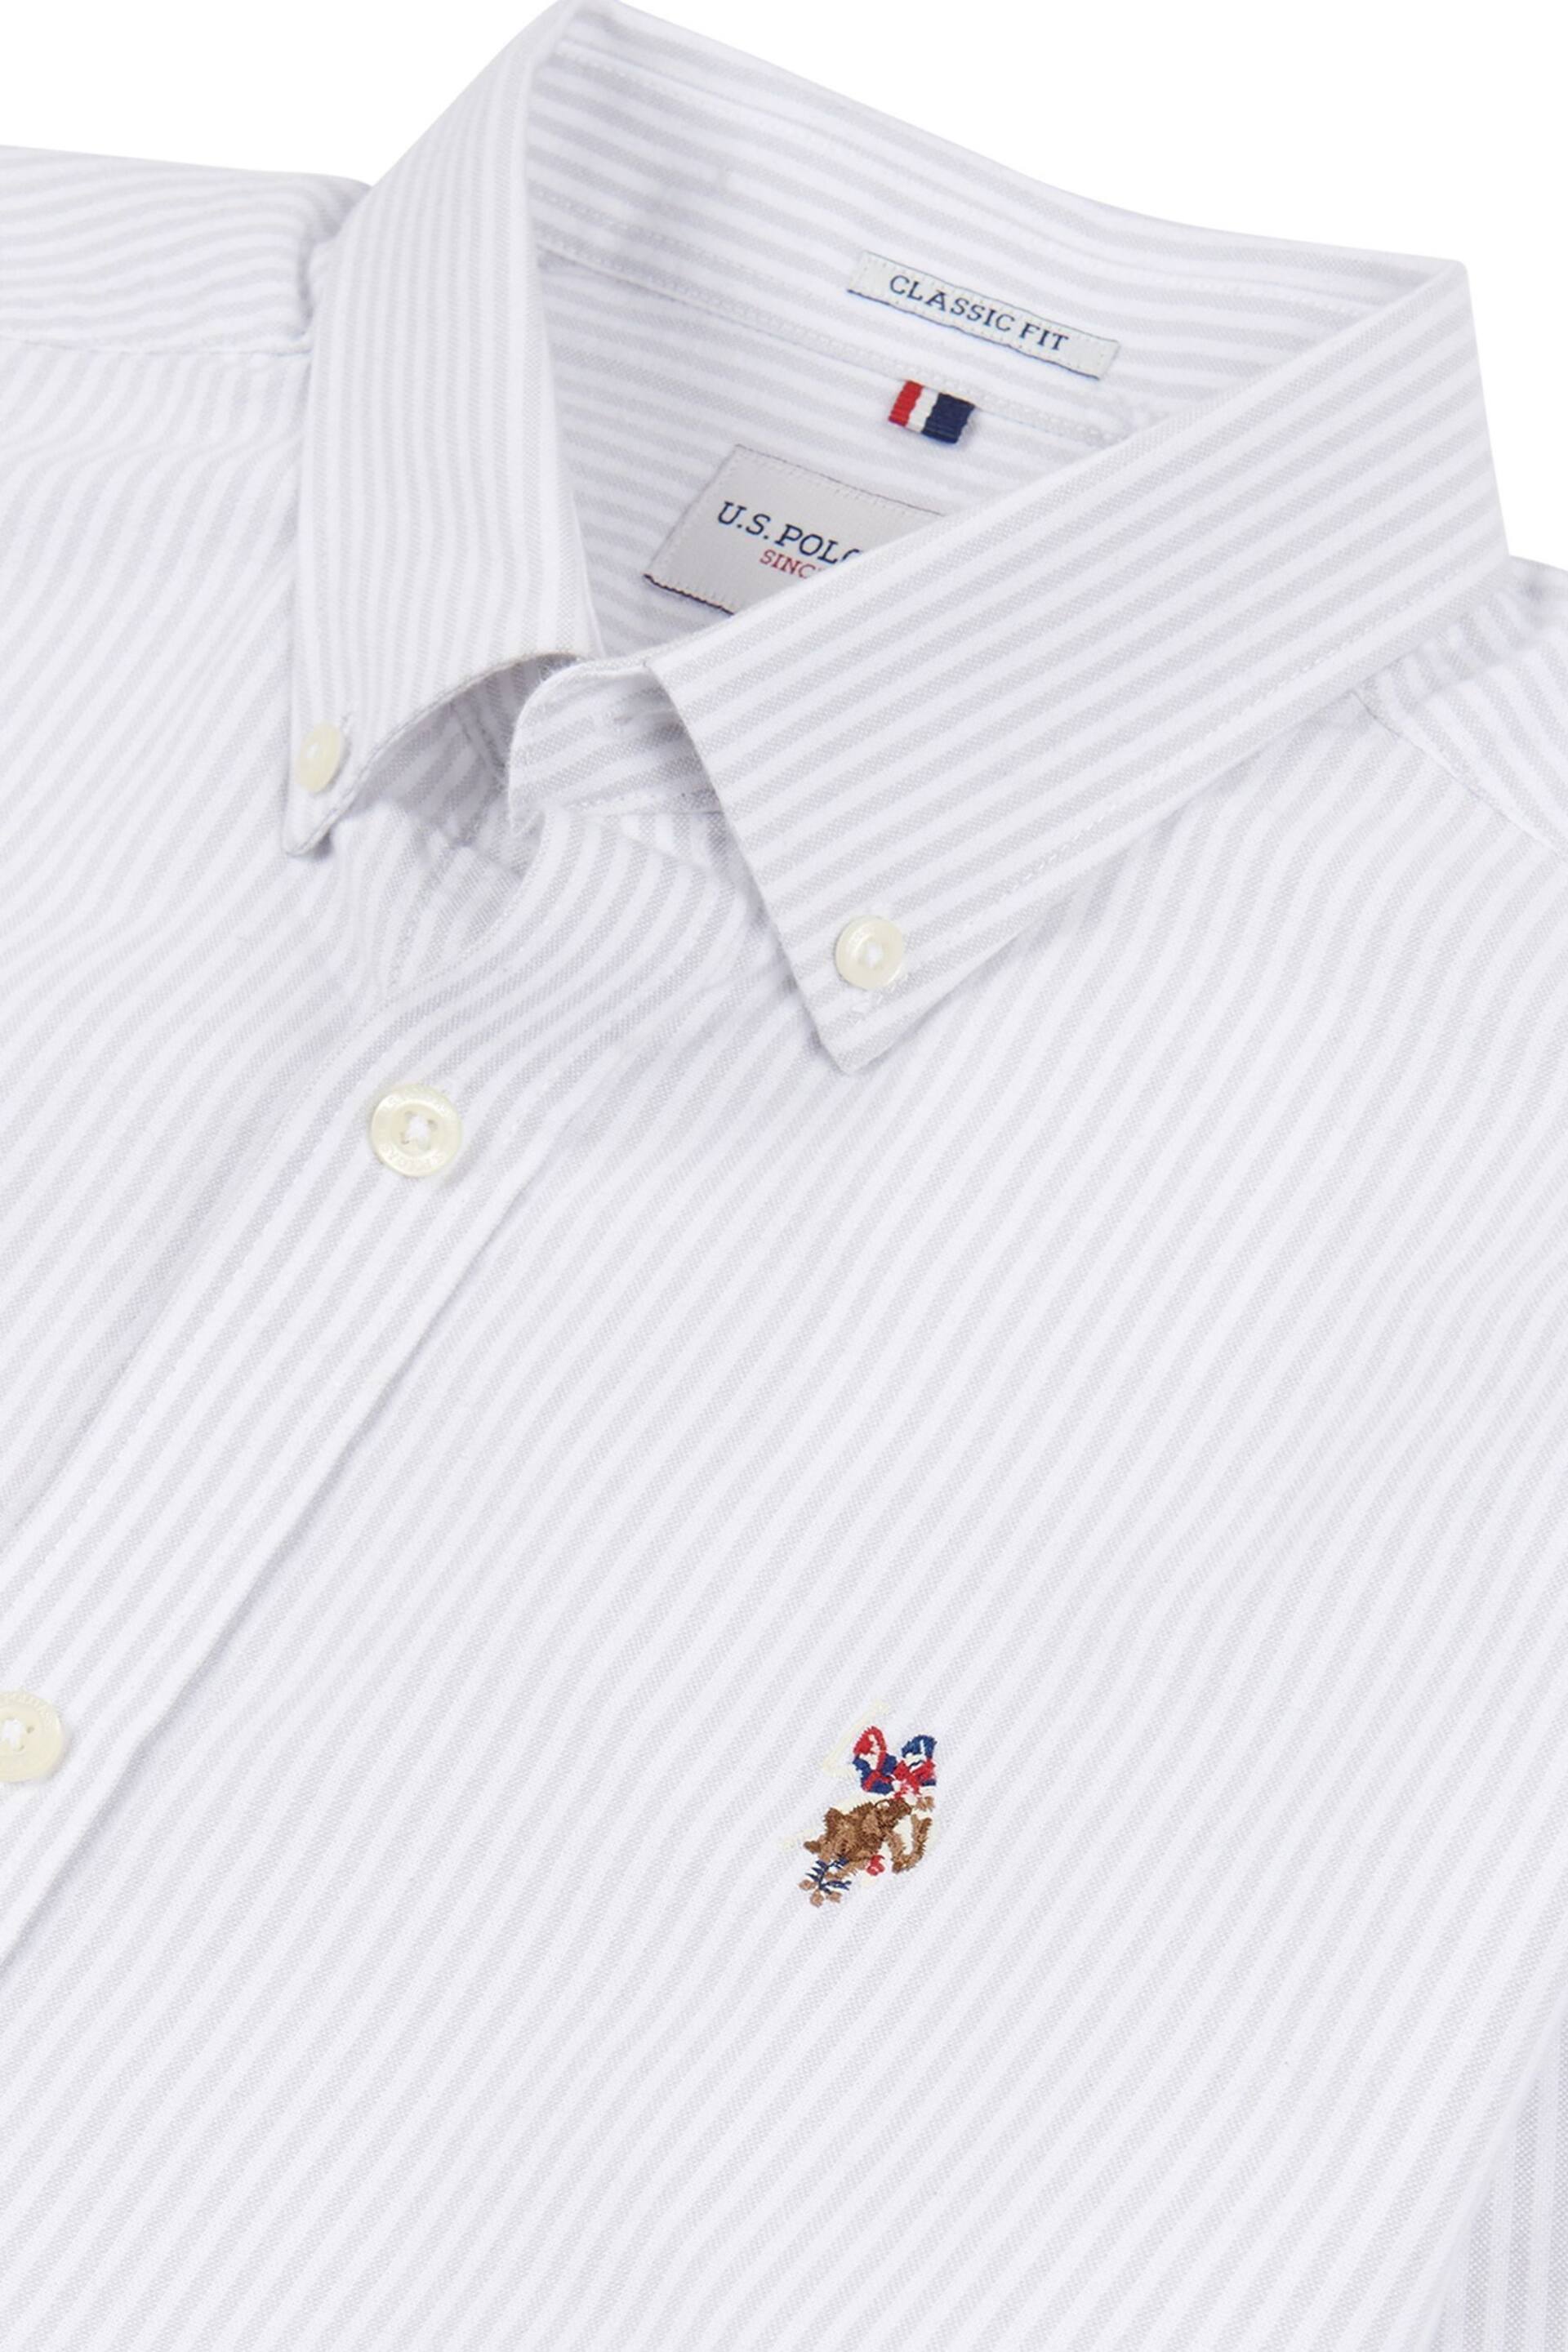 U.S. Polo Assn. Mens White Oxford Stripe Shirt - Image 6 of 6